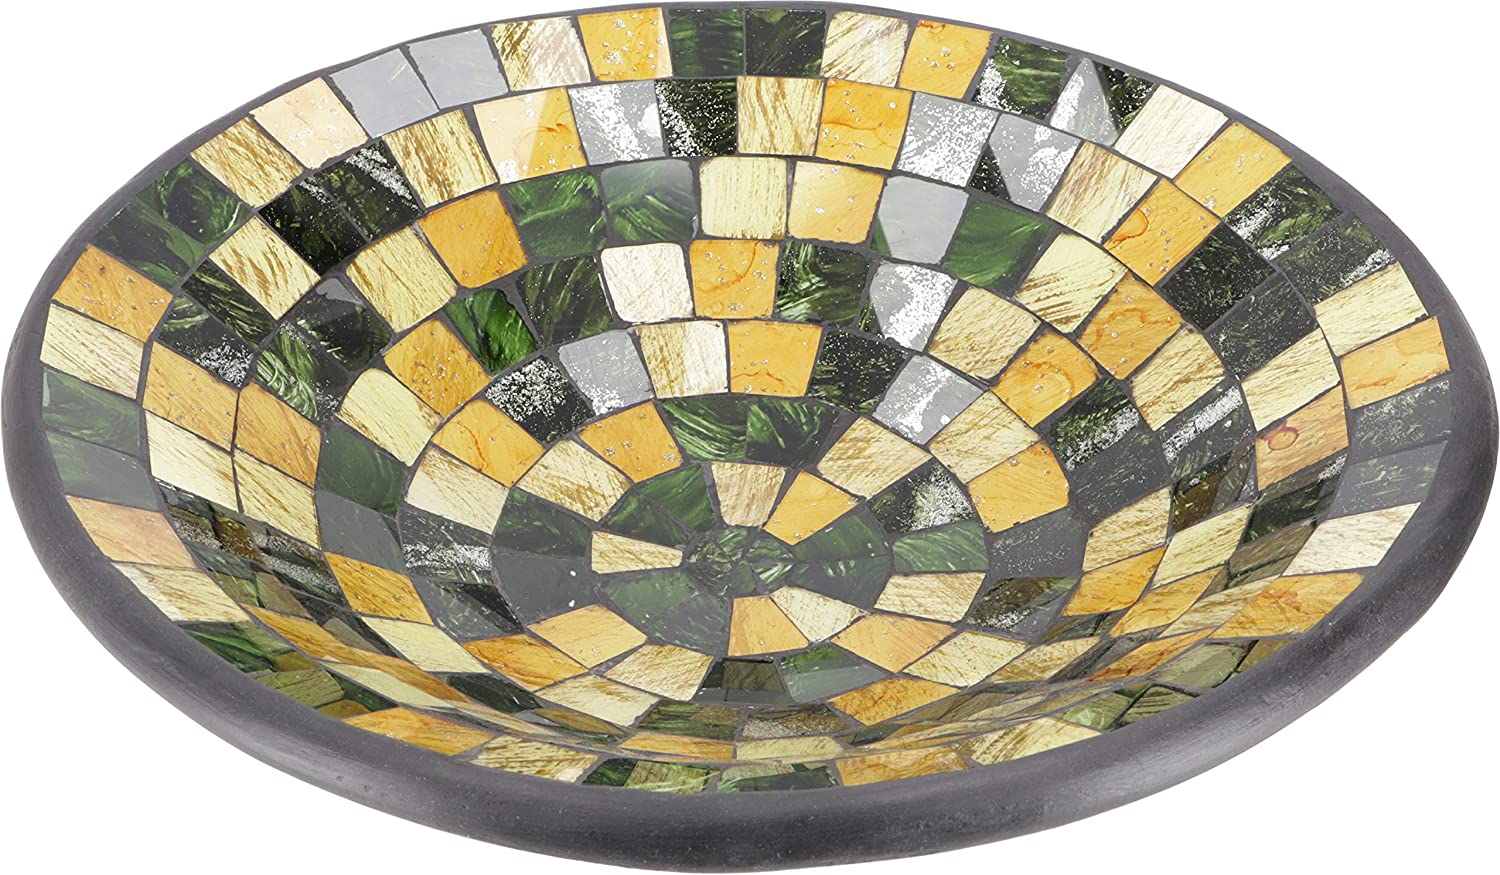 Guru-Shop GURU SHOP Round Mosaic Bowl, Coaster, Decorative Bowl, Handmade Ceramic & Glass Fruit Bowl, Design 23, Multicoloured, Size: Small (Diameter 29 cm), Bowls